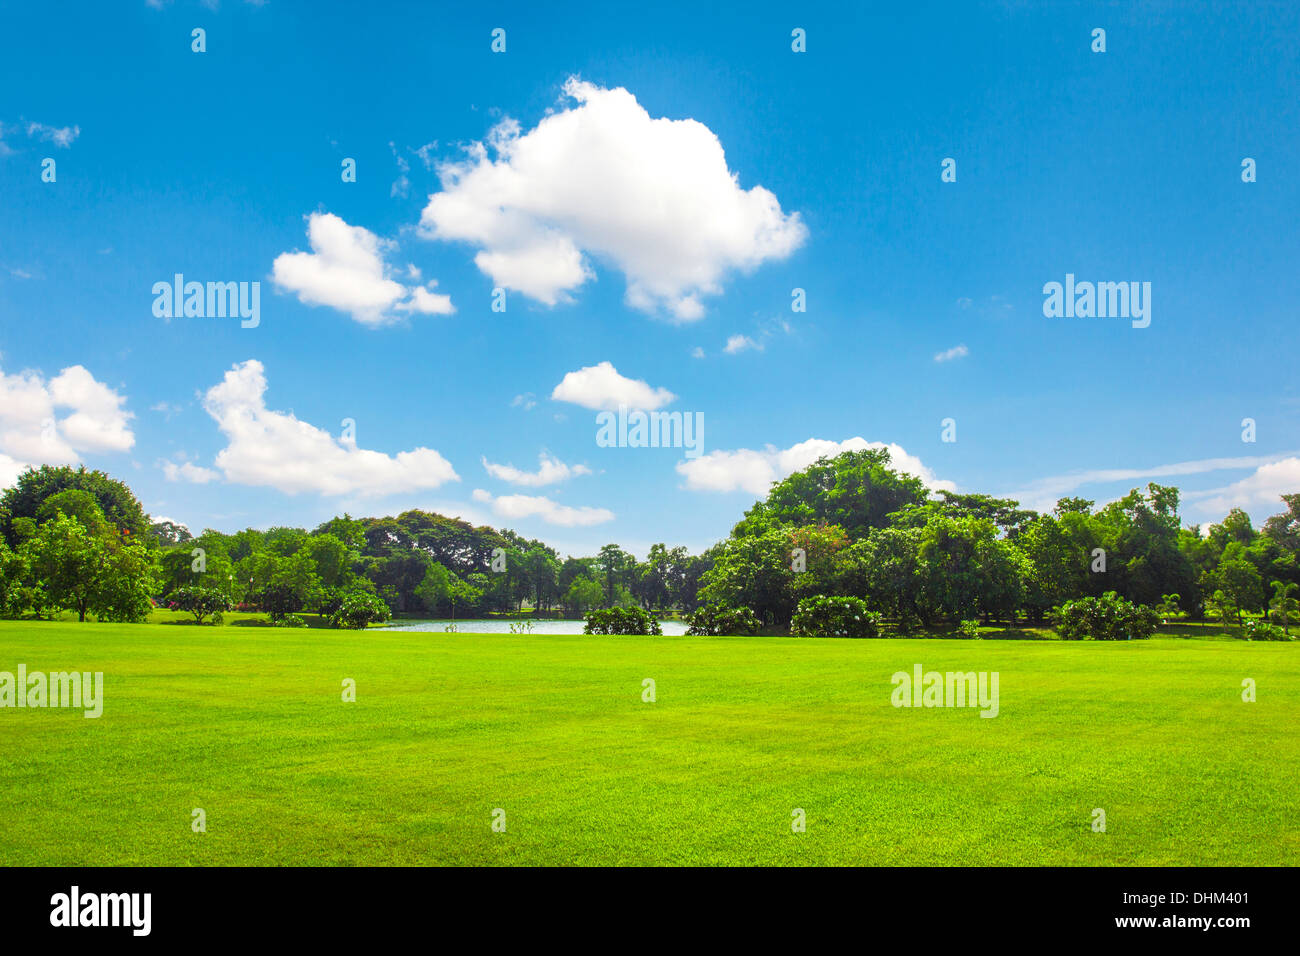 Green Park outdoor avec bleu ciel nuage Banque D'Images